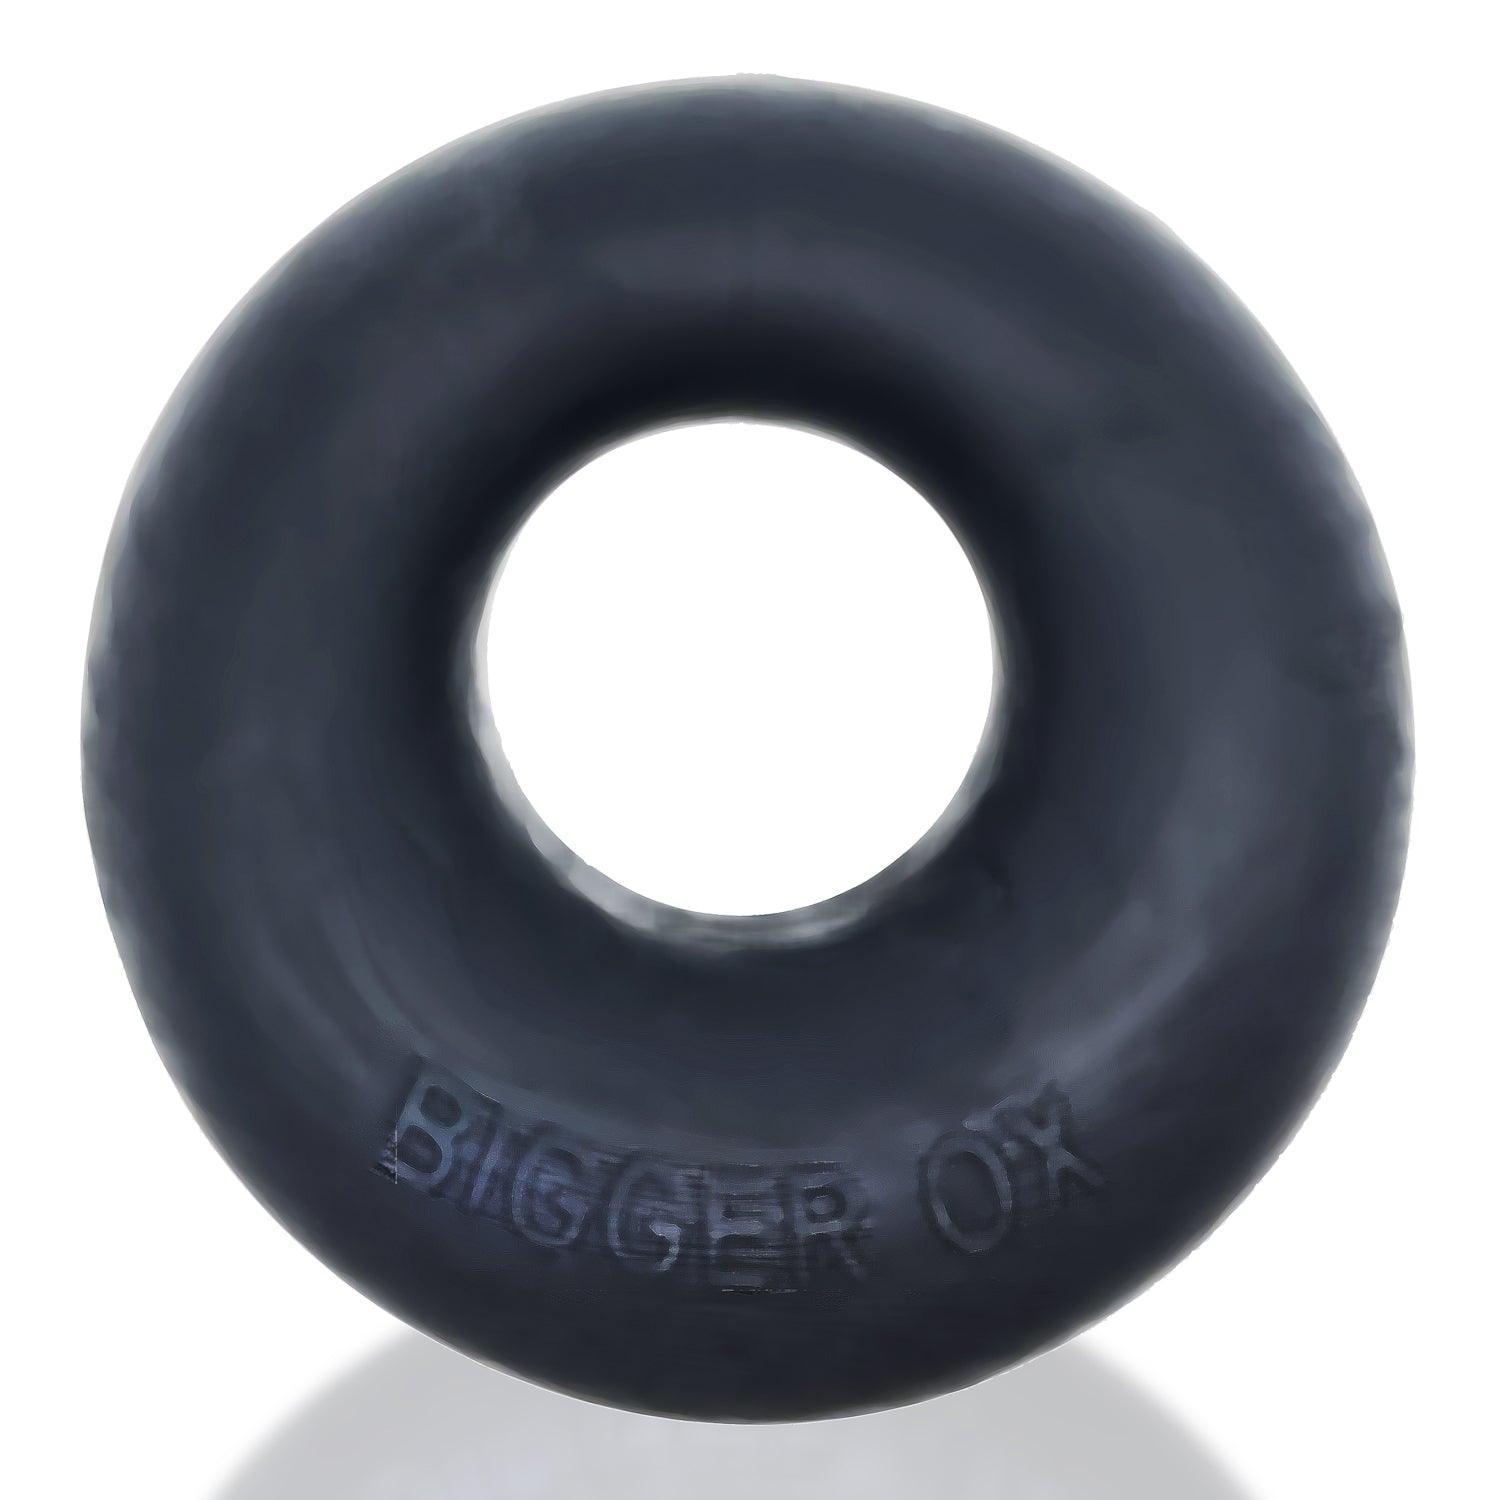 Bigger Ox Cockring - Black Ice - My Sex Toy Hub